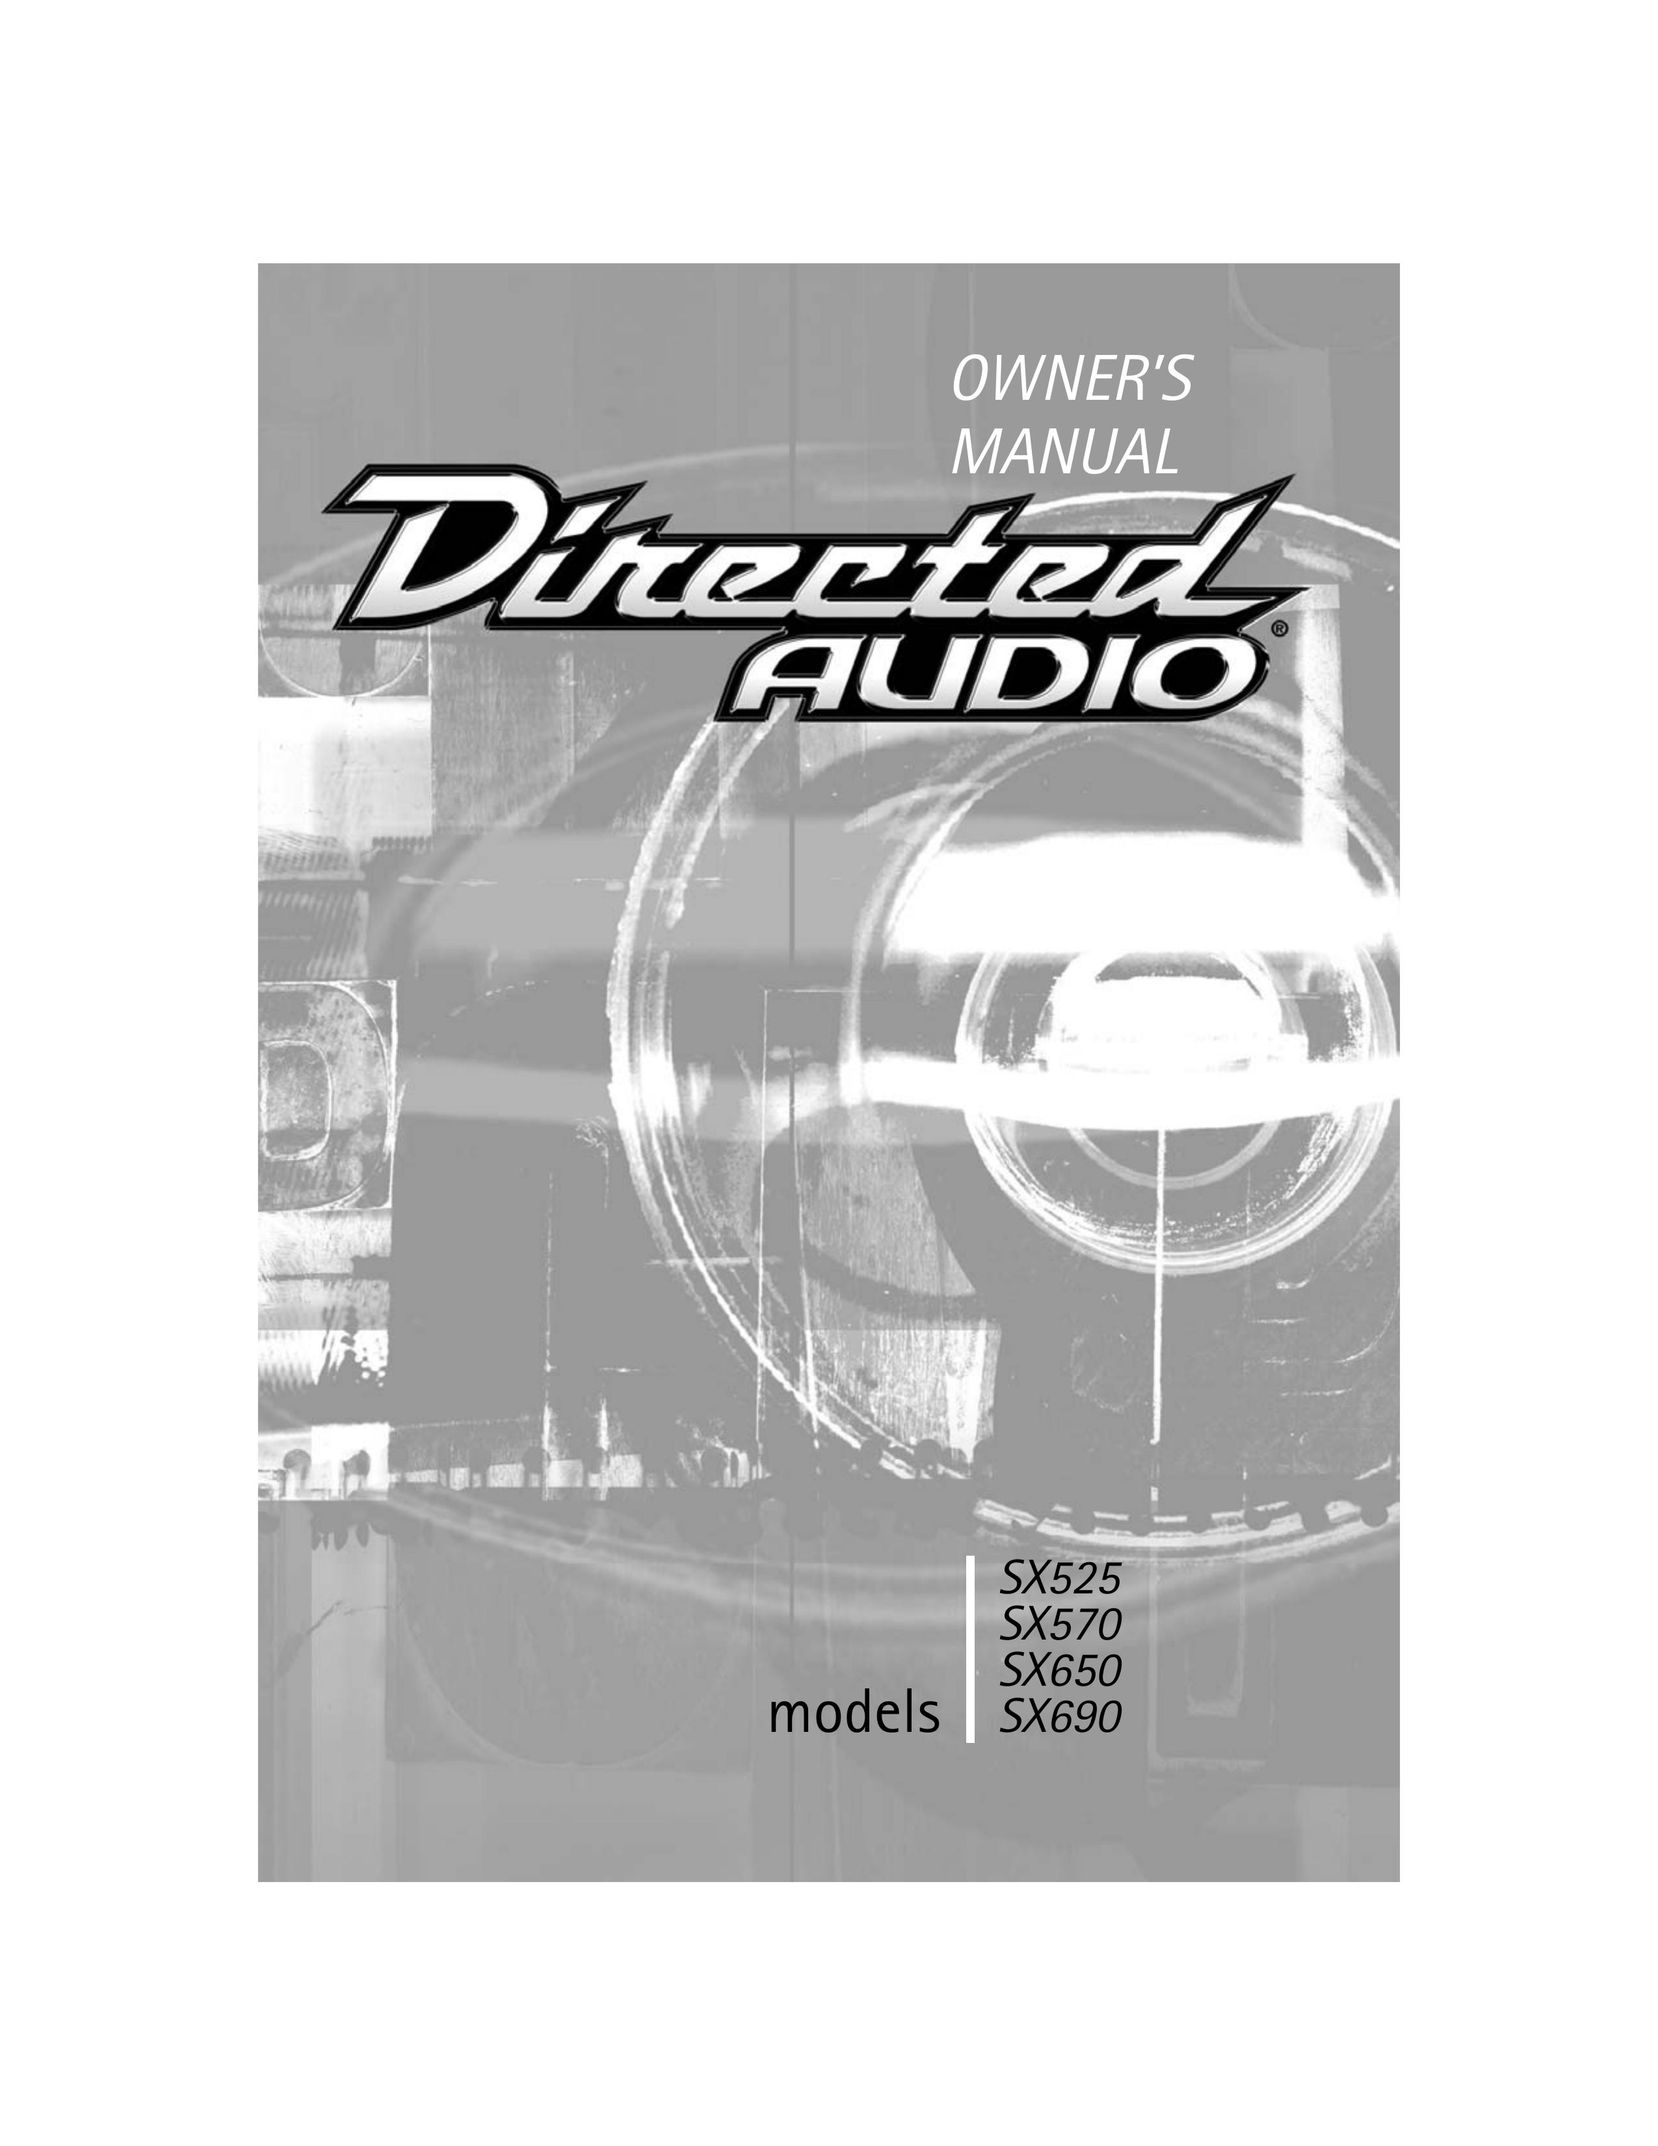 Directed Audio SX690 Car Speaker User Manual